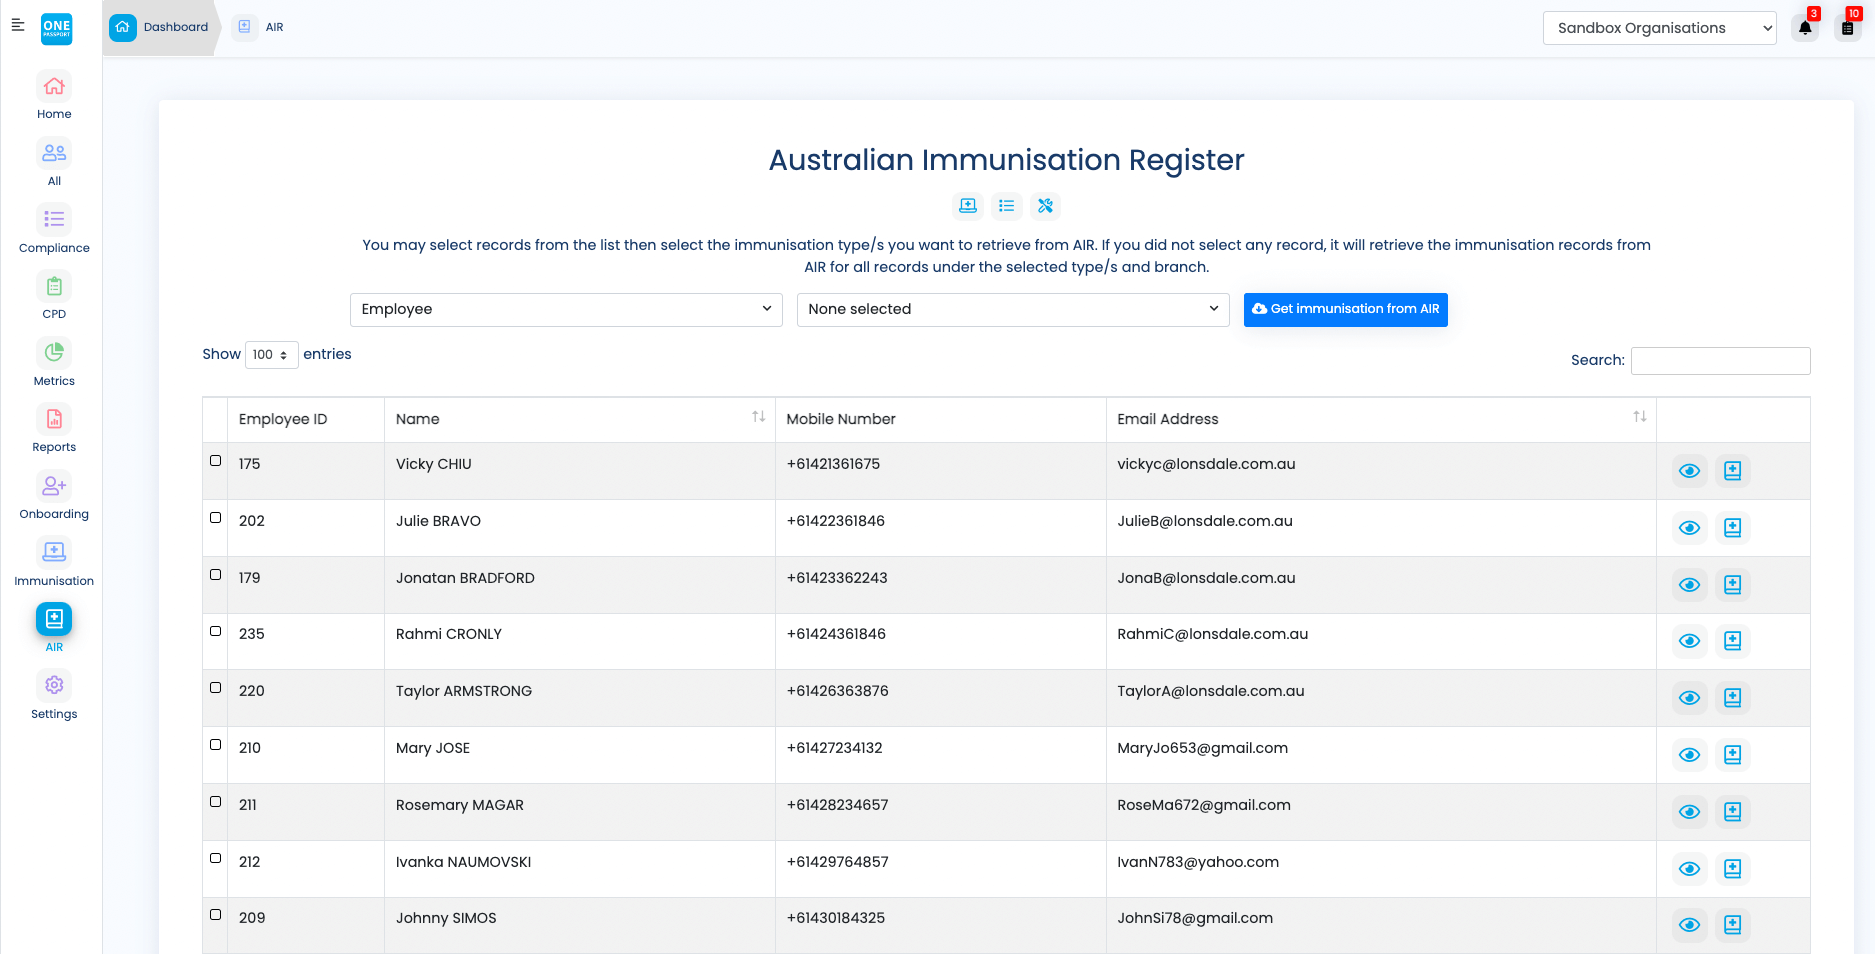 OnePassport screenshot showing the Australian Immunisation Register integrated portal